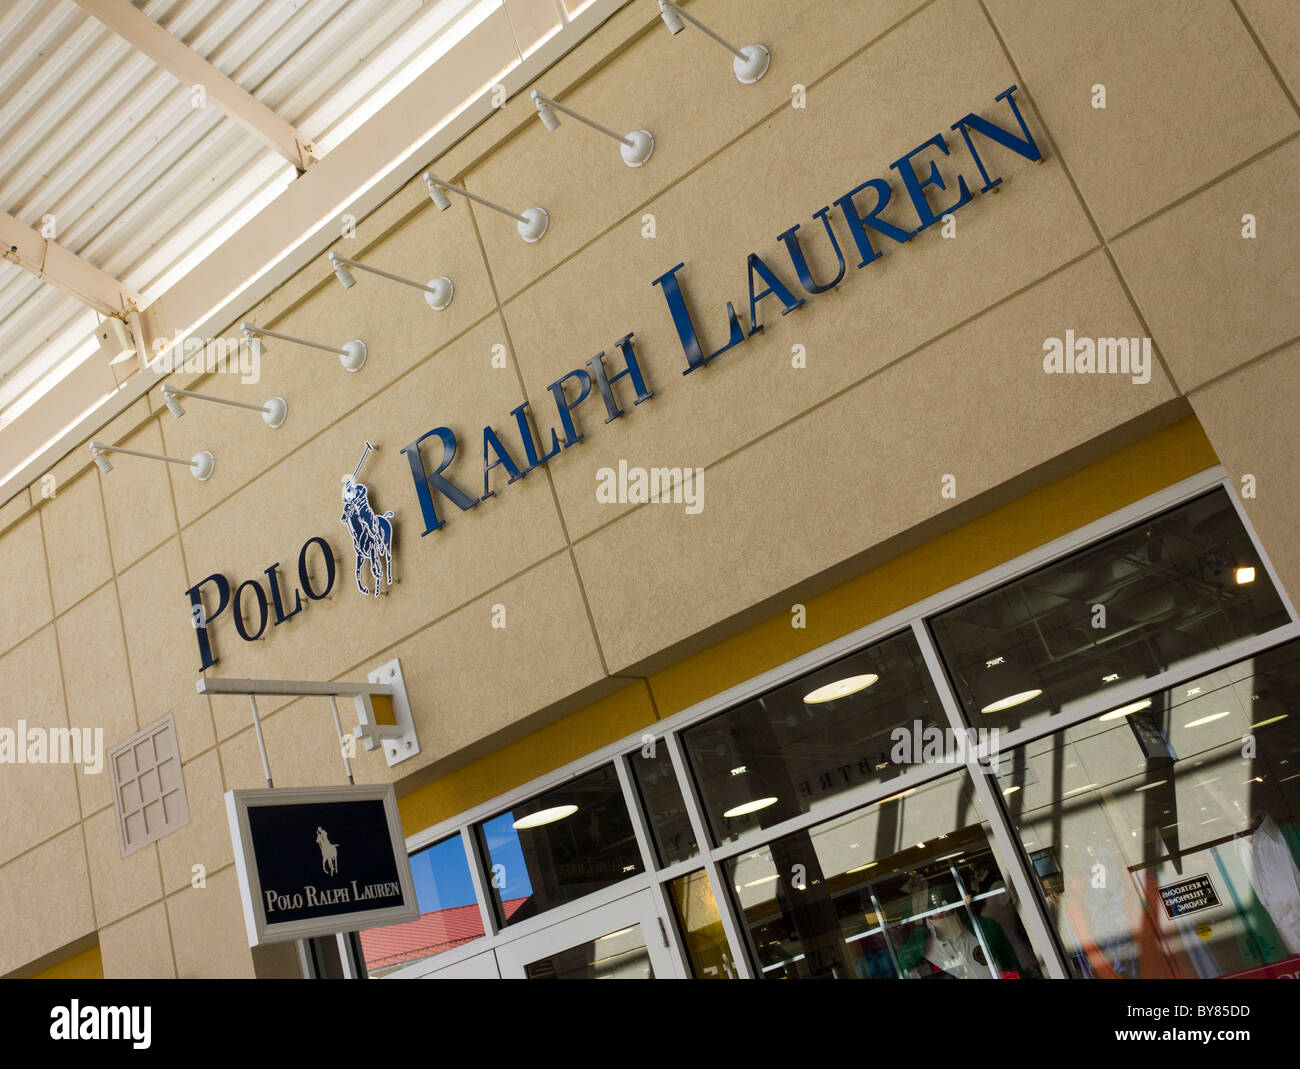 Polo Ralph Lauren store, Chicago Premium Outlets, Aurora, Illinois, USA  Stock Photo - Alamy